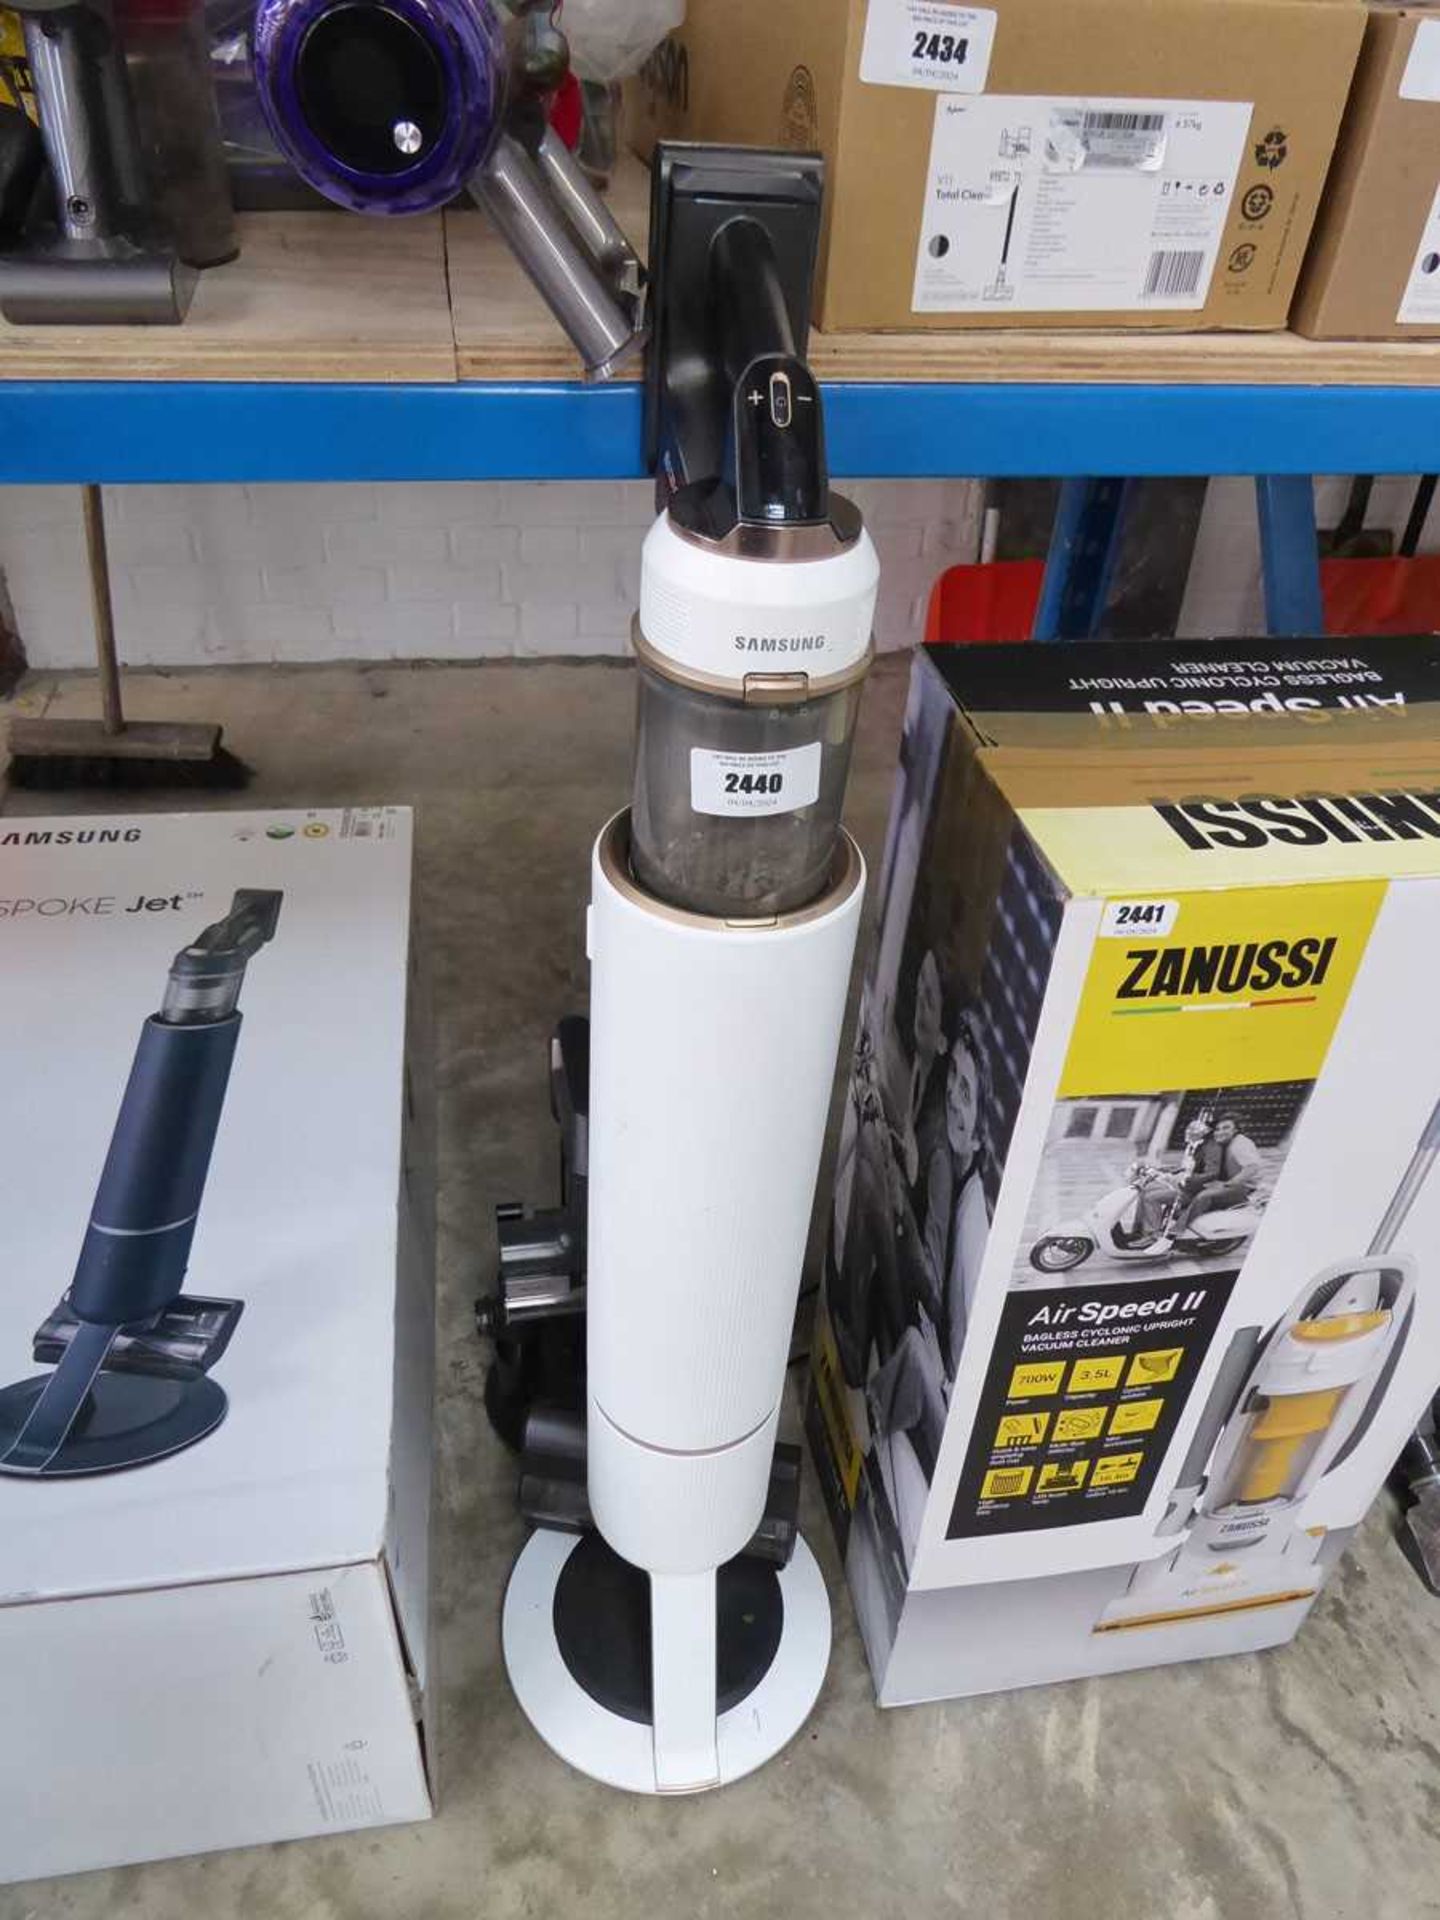 +VAT Unboxed Samsung Bespoke Jet vacuum cleaner